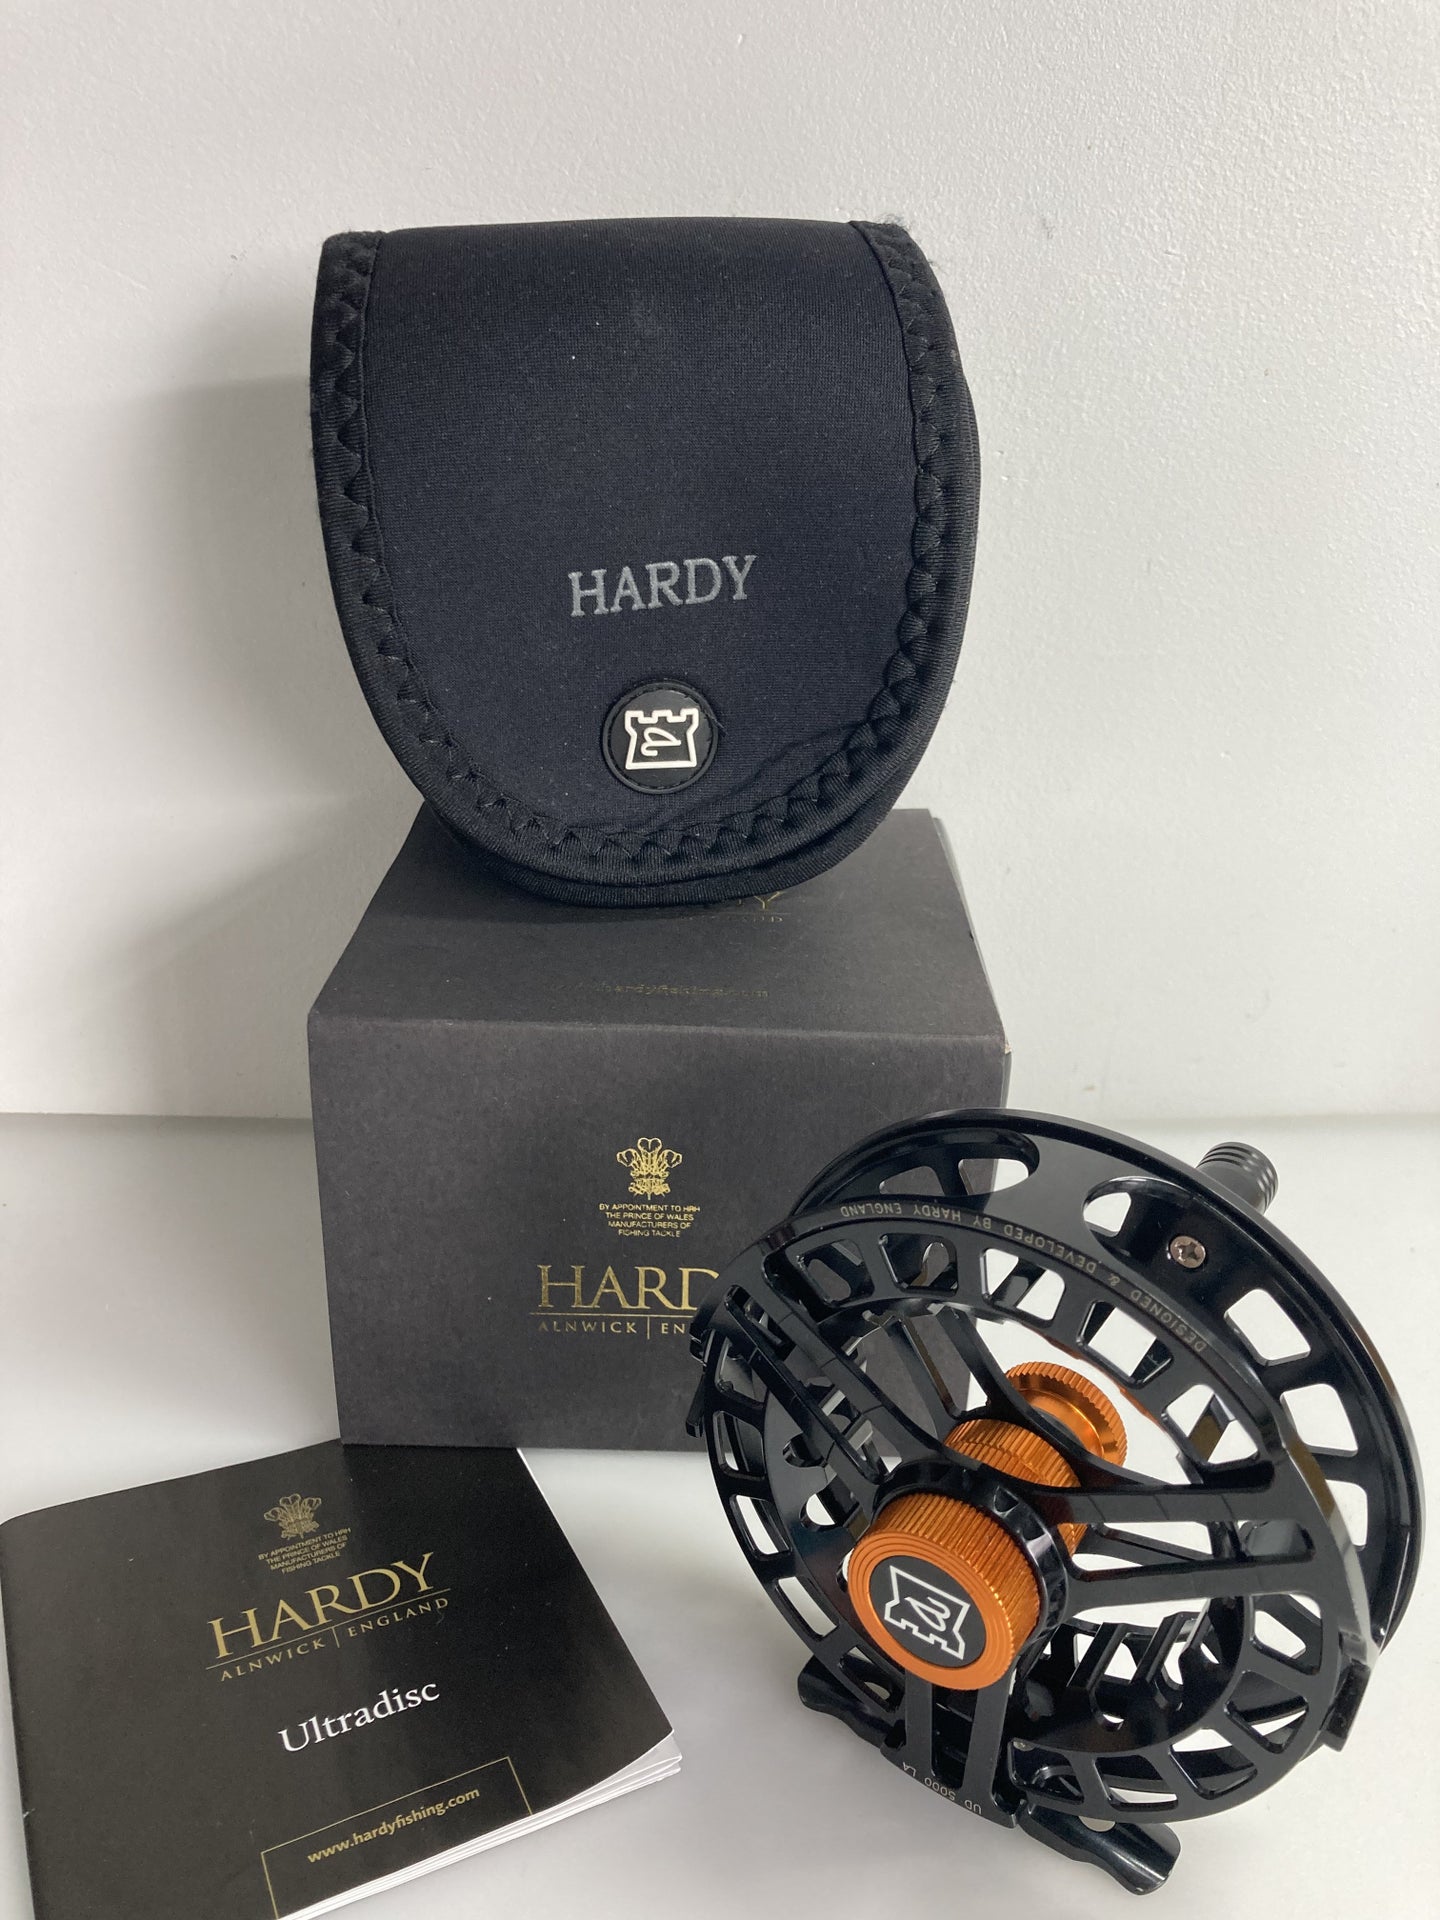 NEW Hardy Ultradisc UDLA 5000 Fly Reel Black